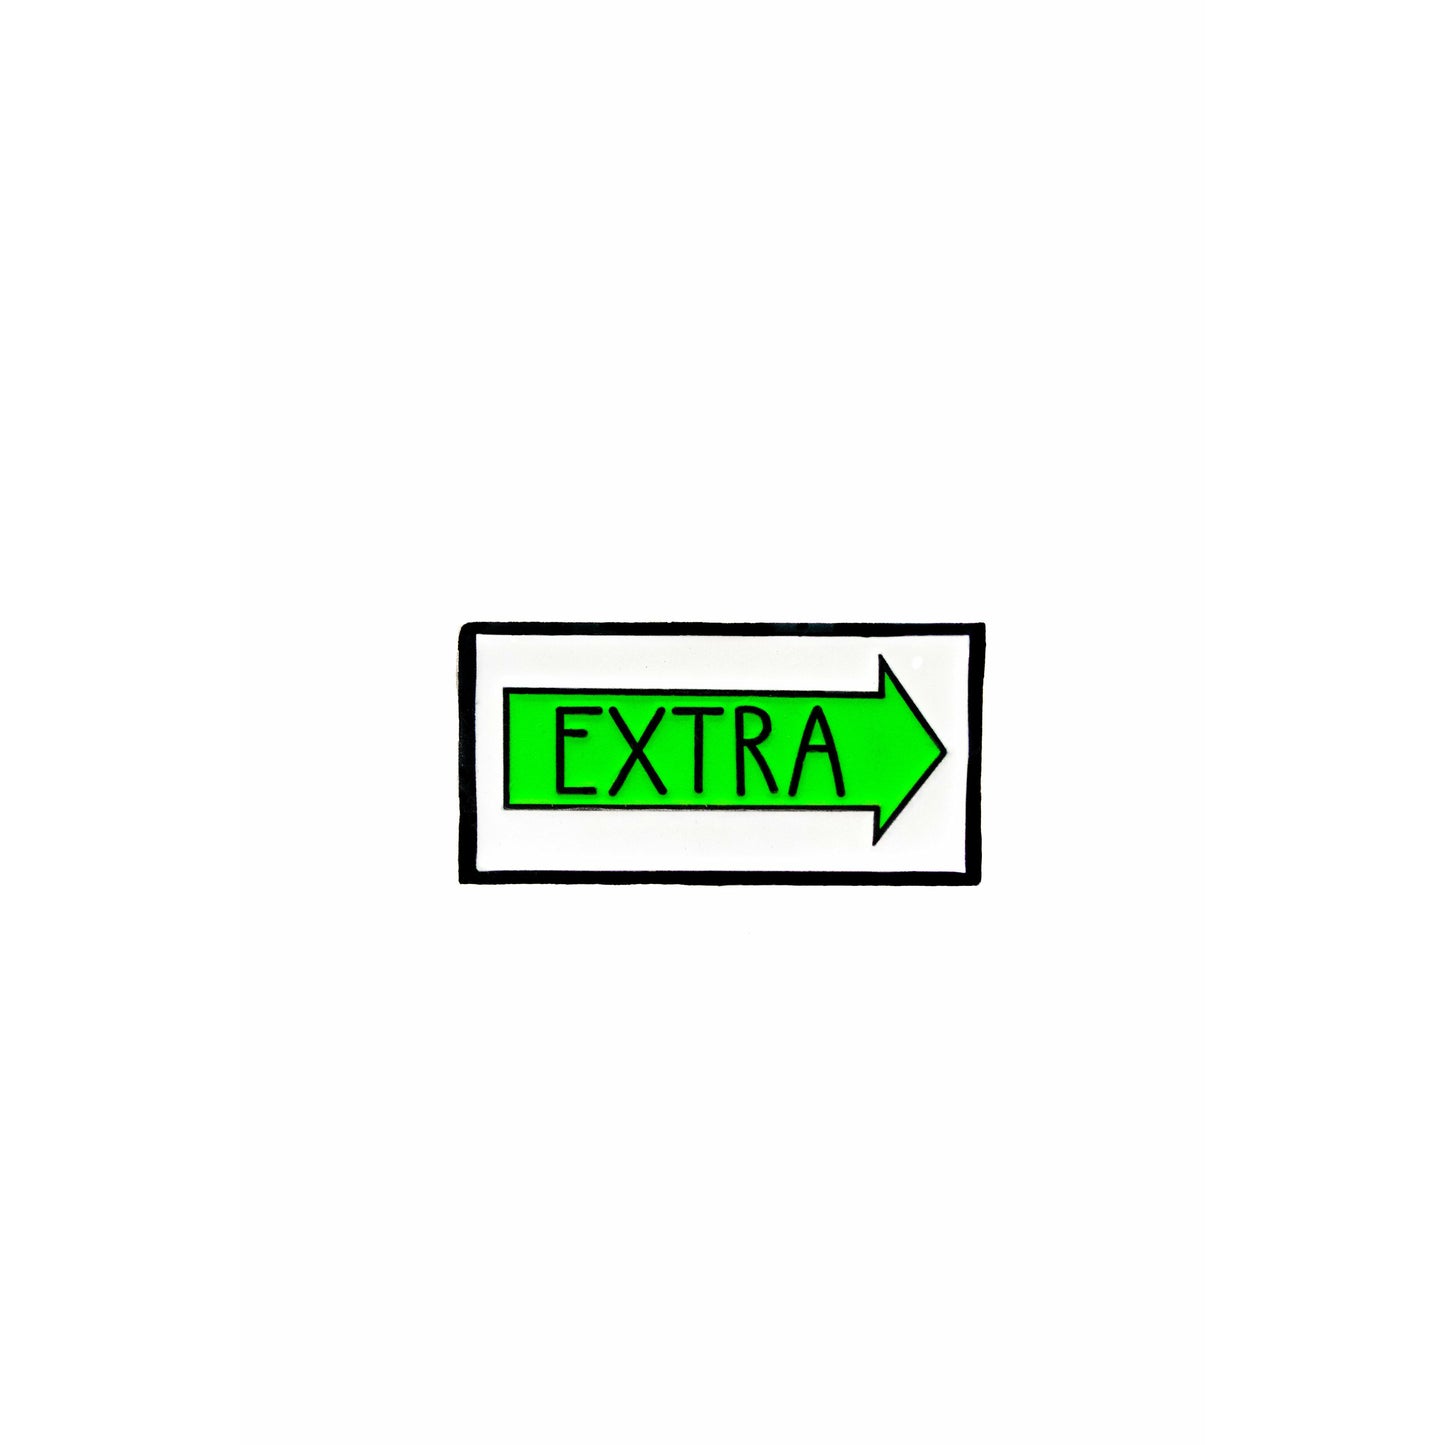 green extra film arrow location sign enamel pin